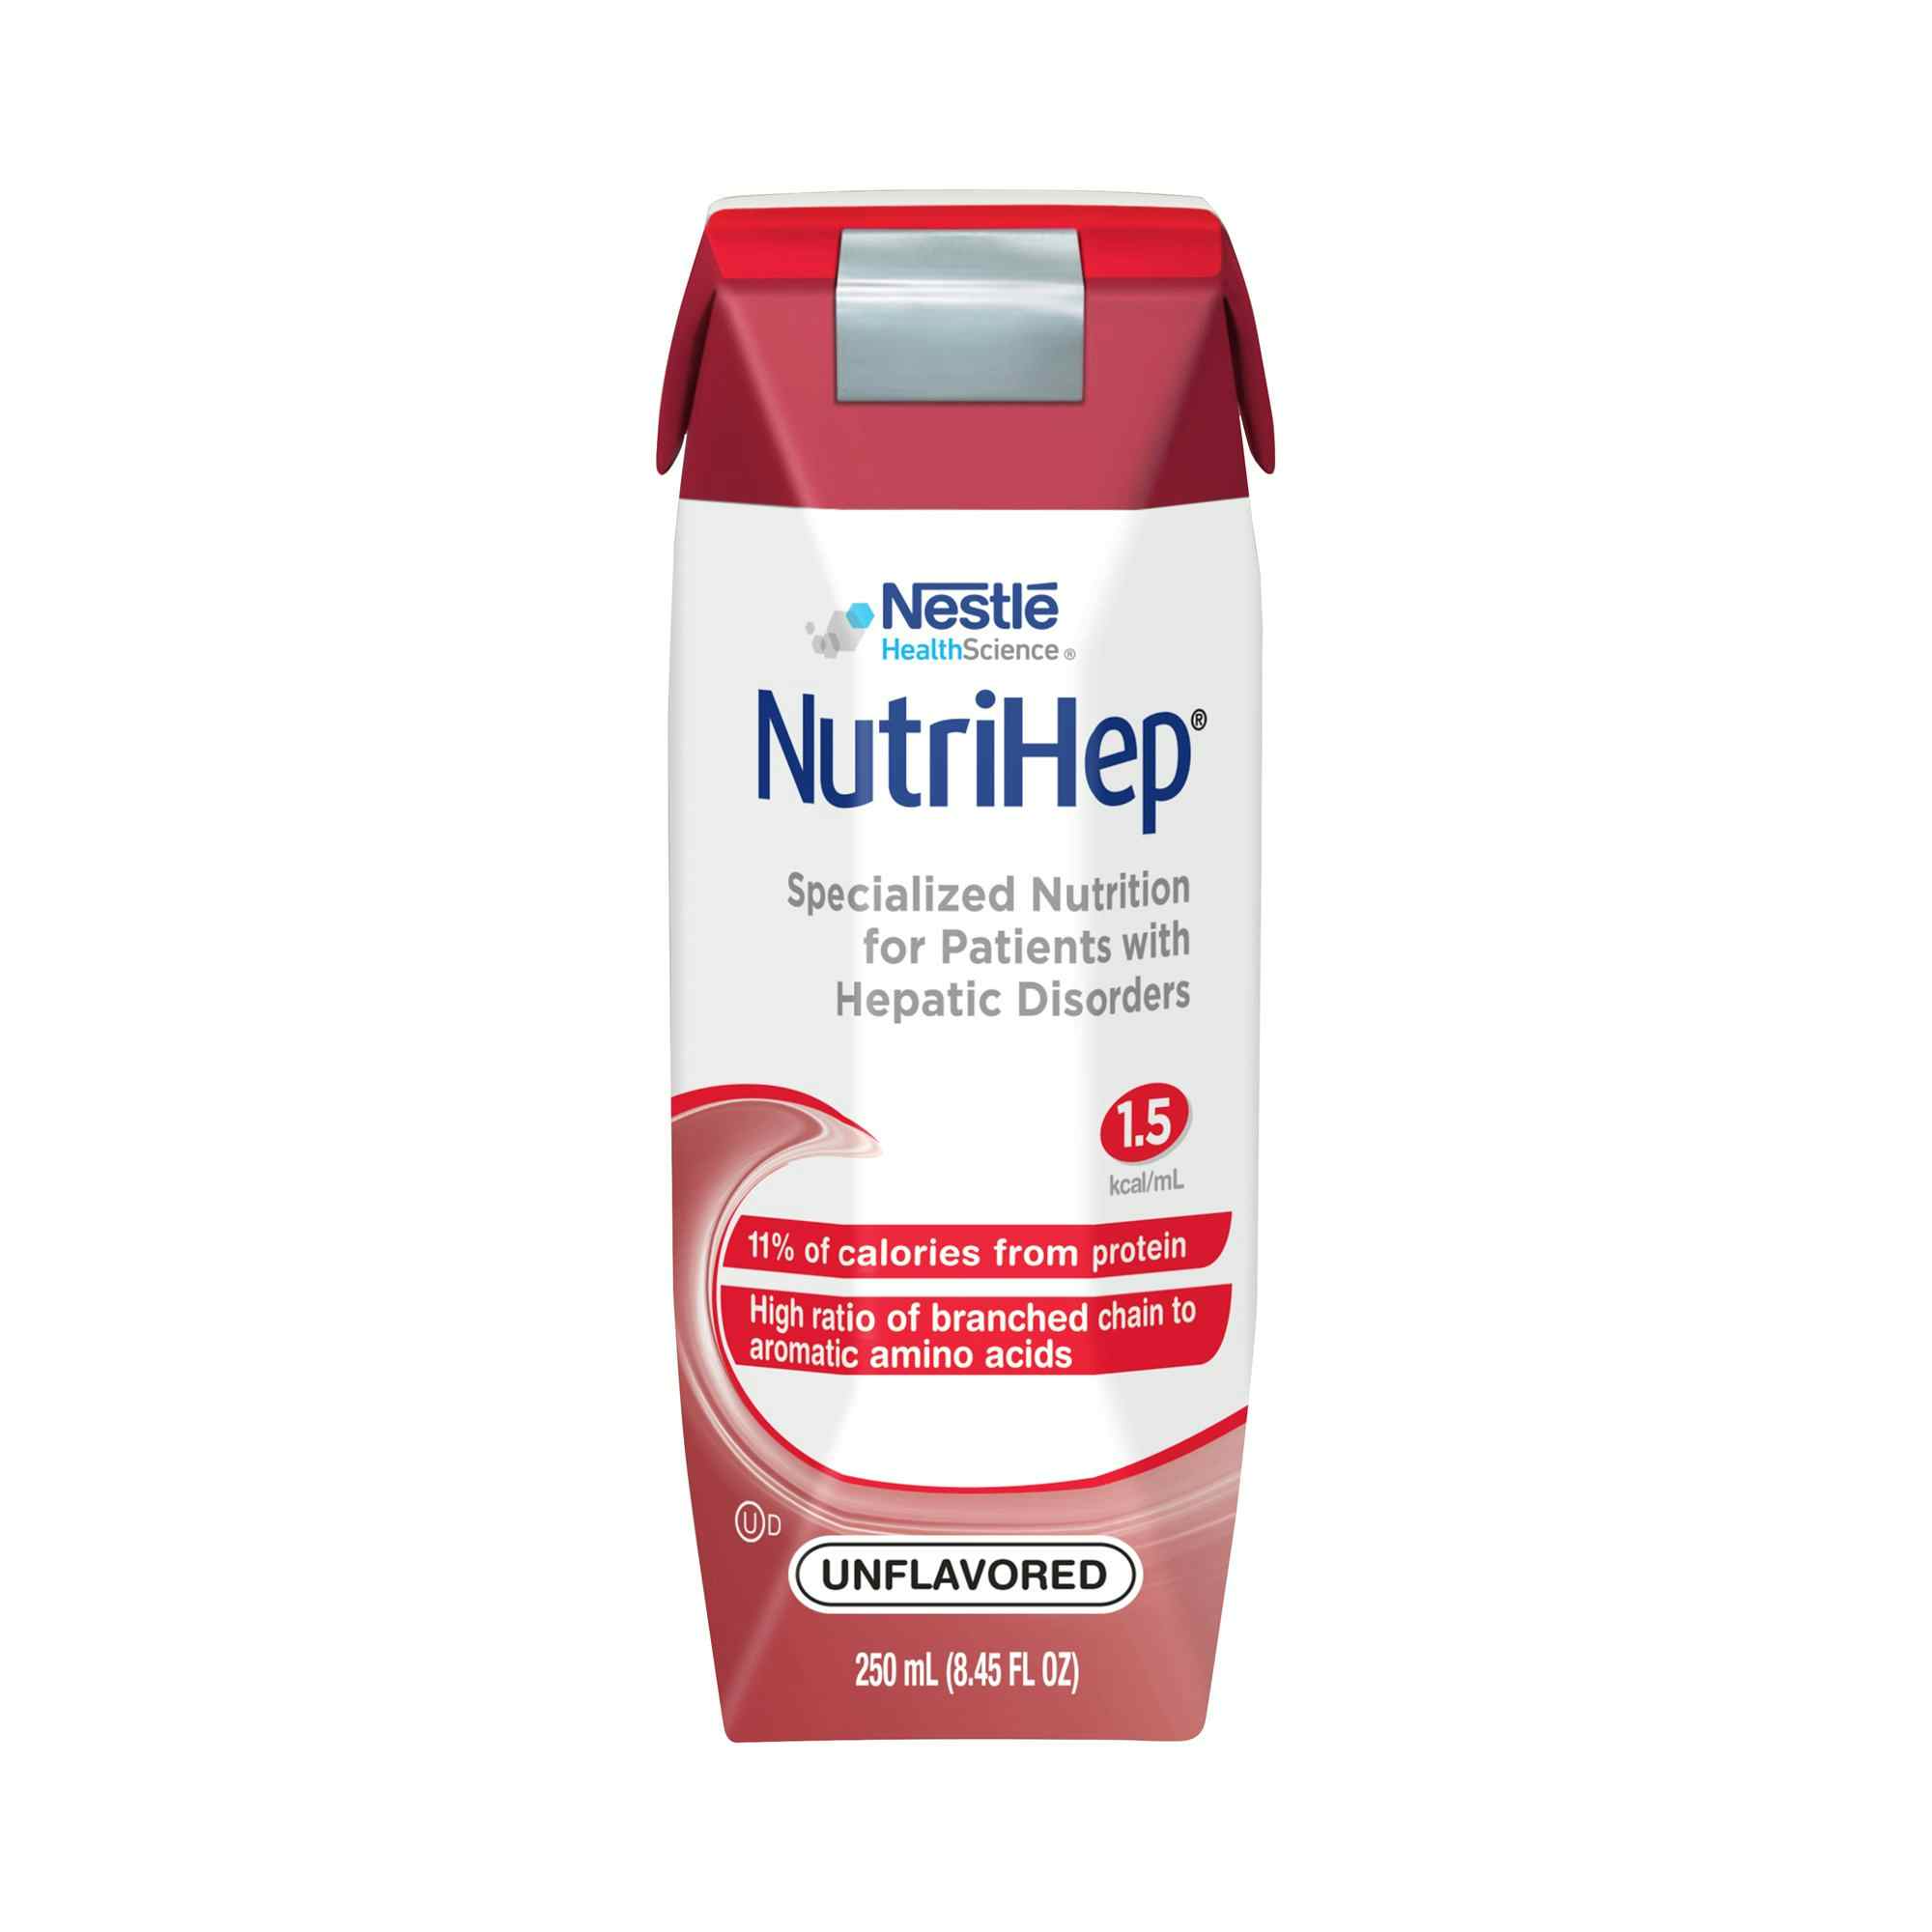 Nestle HealthScience NutriHep Specialized Nutrition Tube Feeding Formula, 8.45 oz, 9871616479, 1 Each